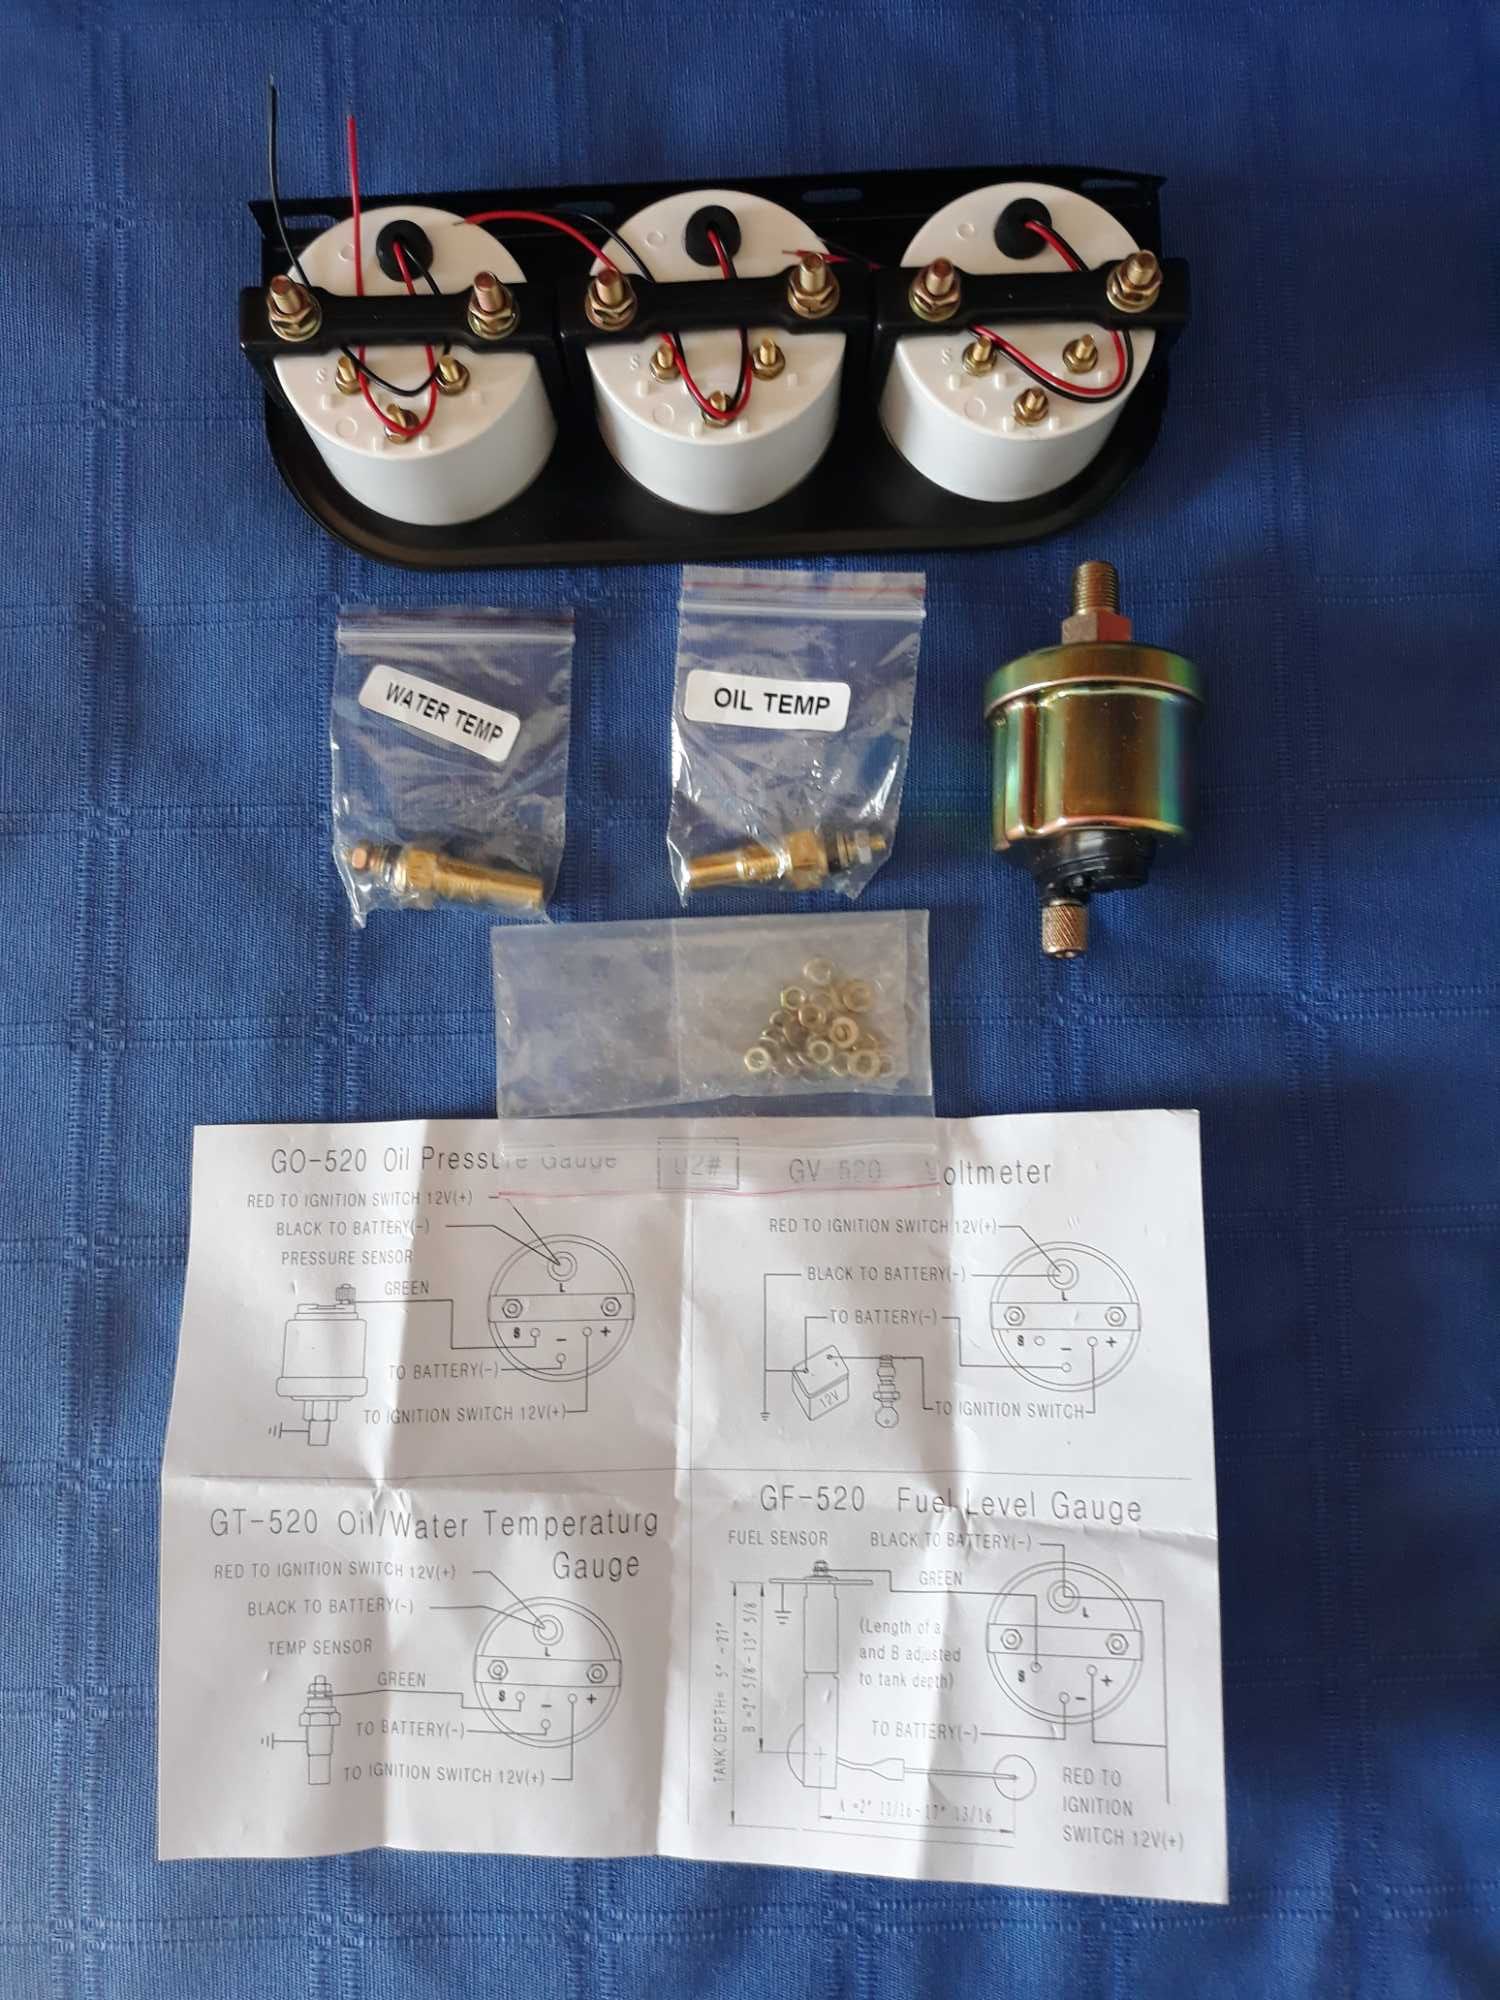 Voltímetro,Amperímetro,Termómetros,Manómetros,sensores e suportes